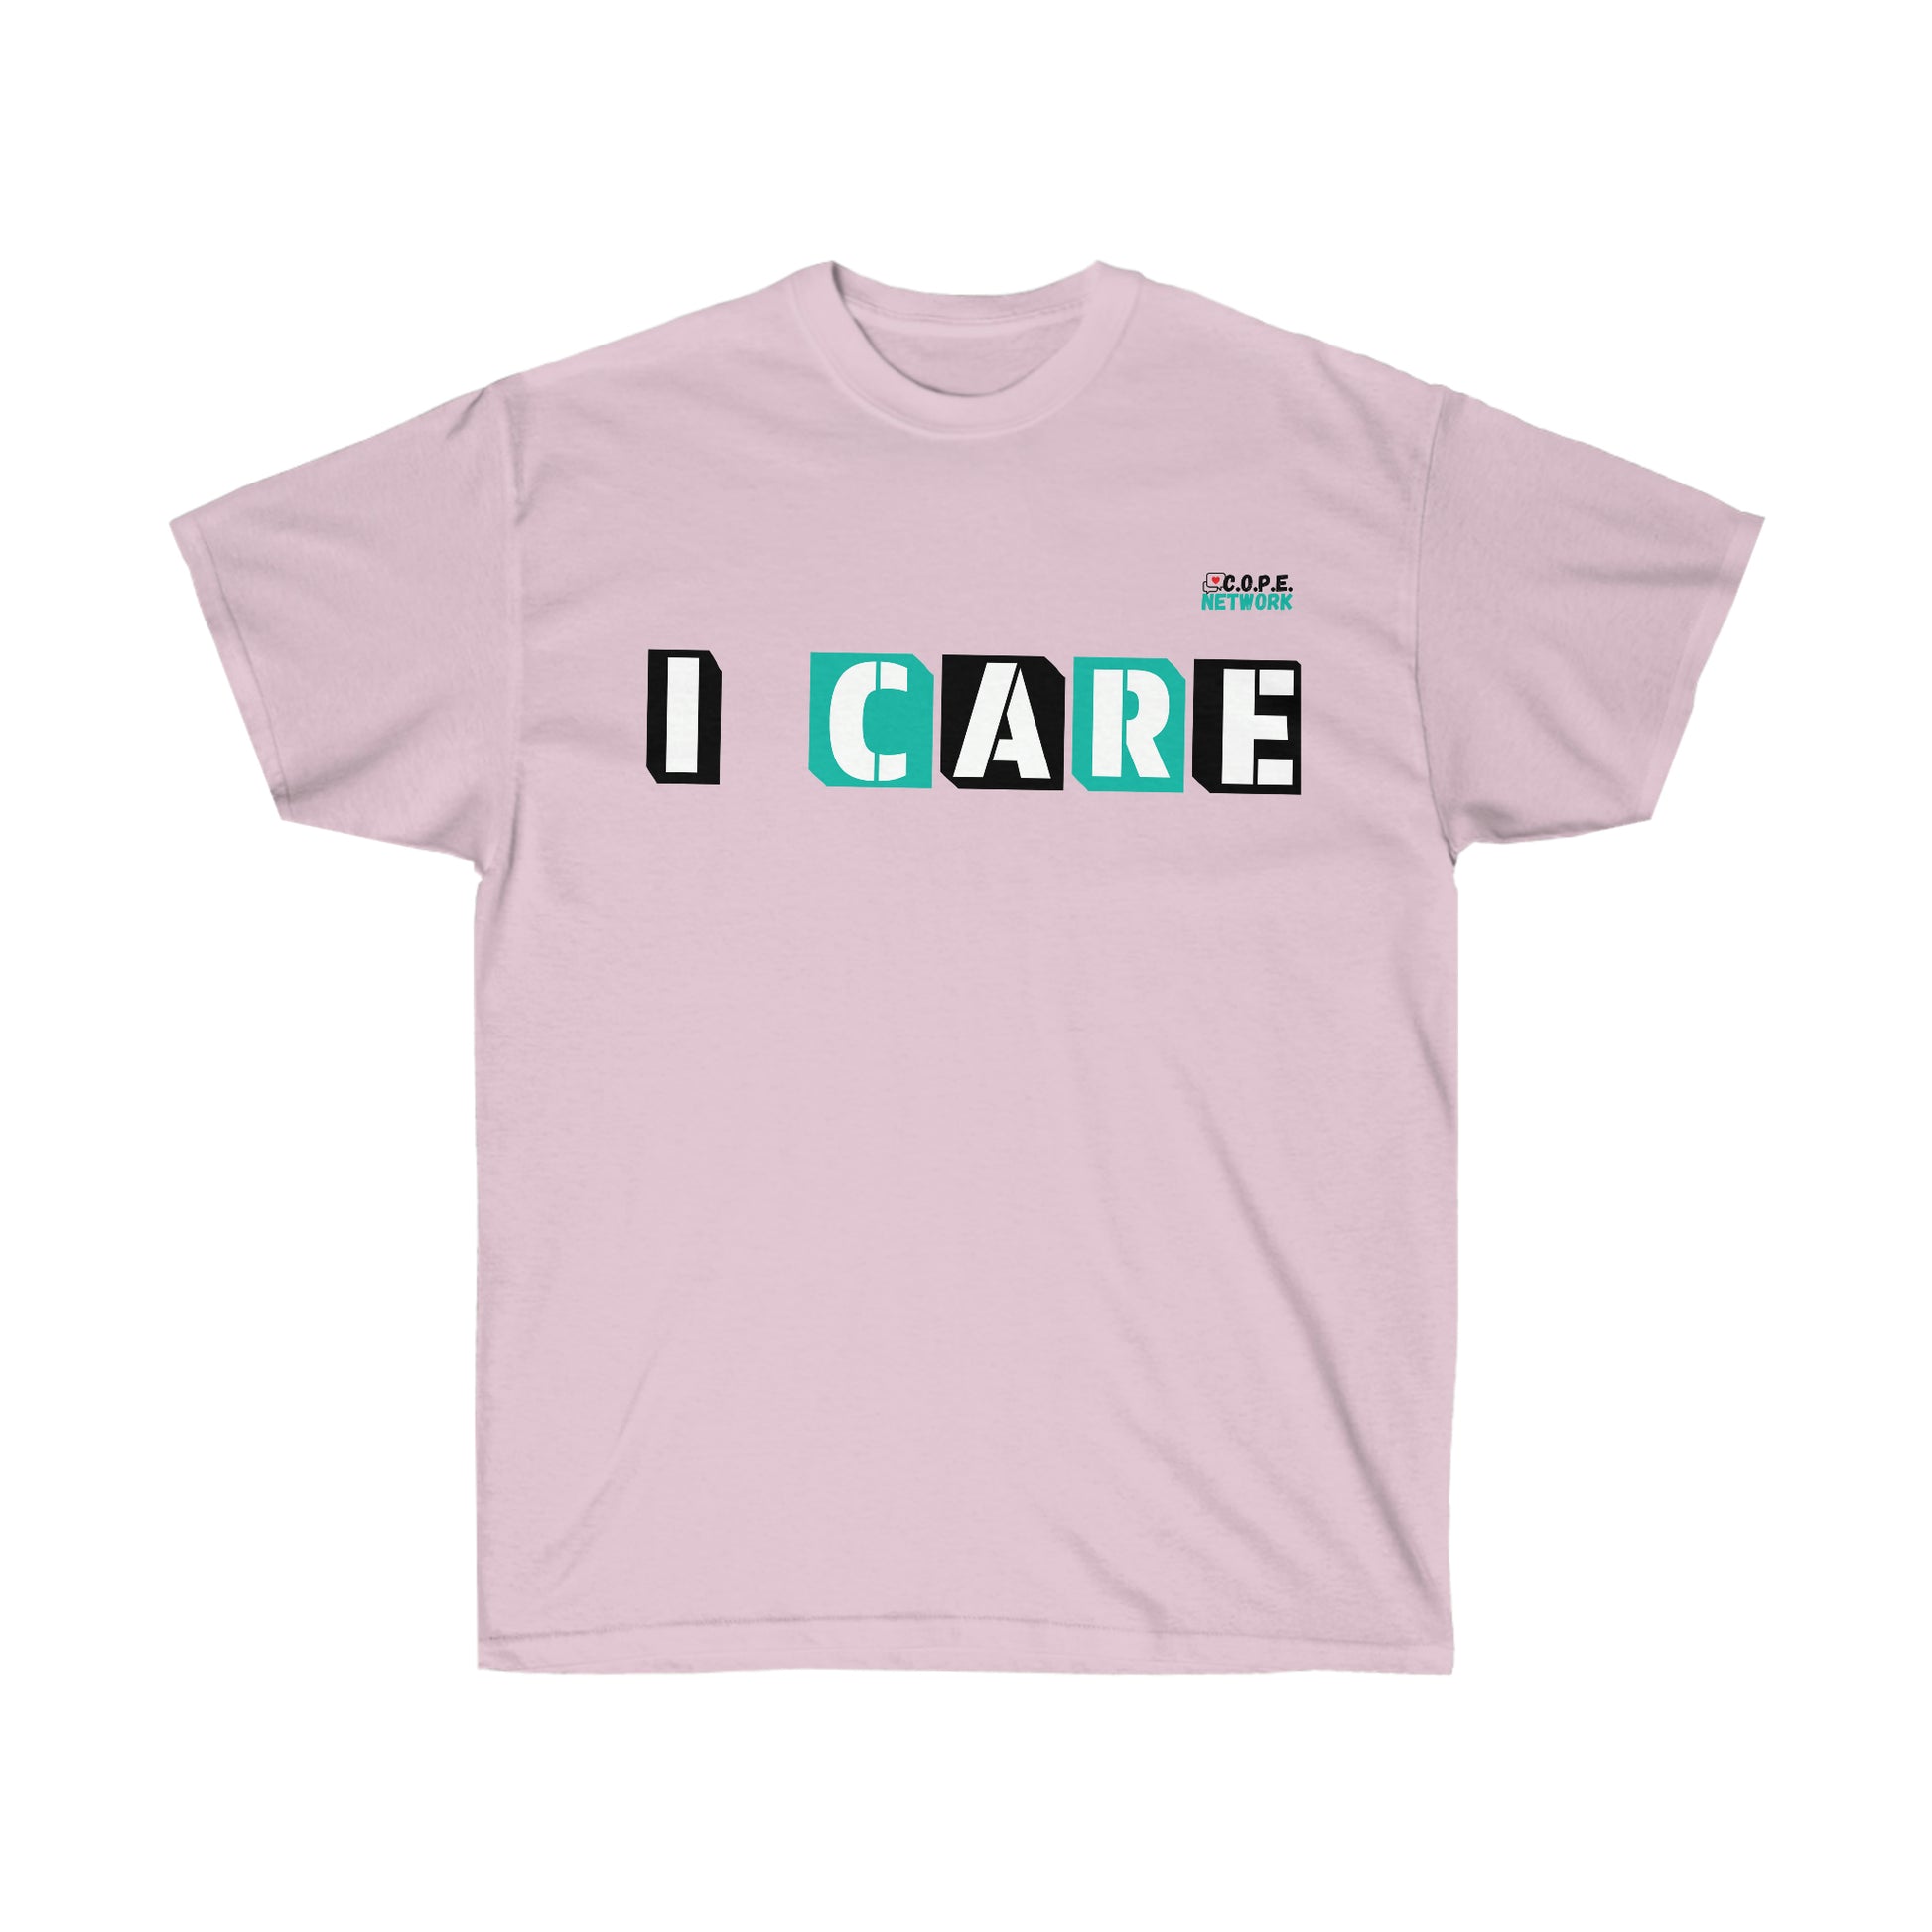 I care Light pink T shirt